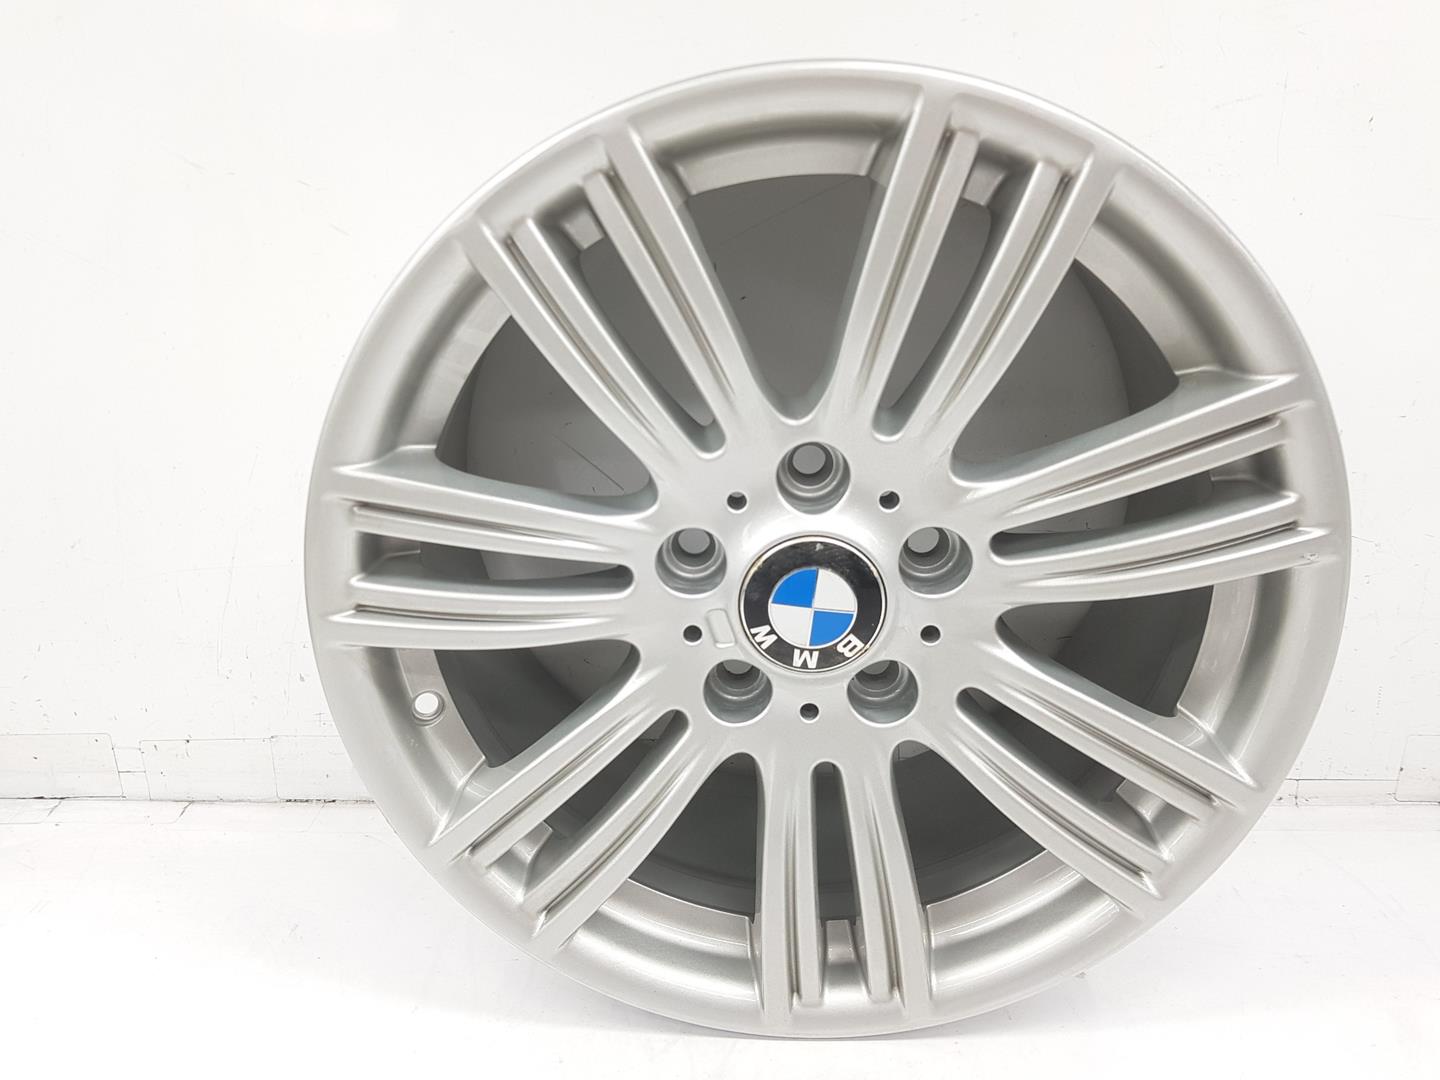 BMW 1 Series F20/F21 (2011-2020) Wheel 36117845851, 8JX17, 17PULGADAS 24145026